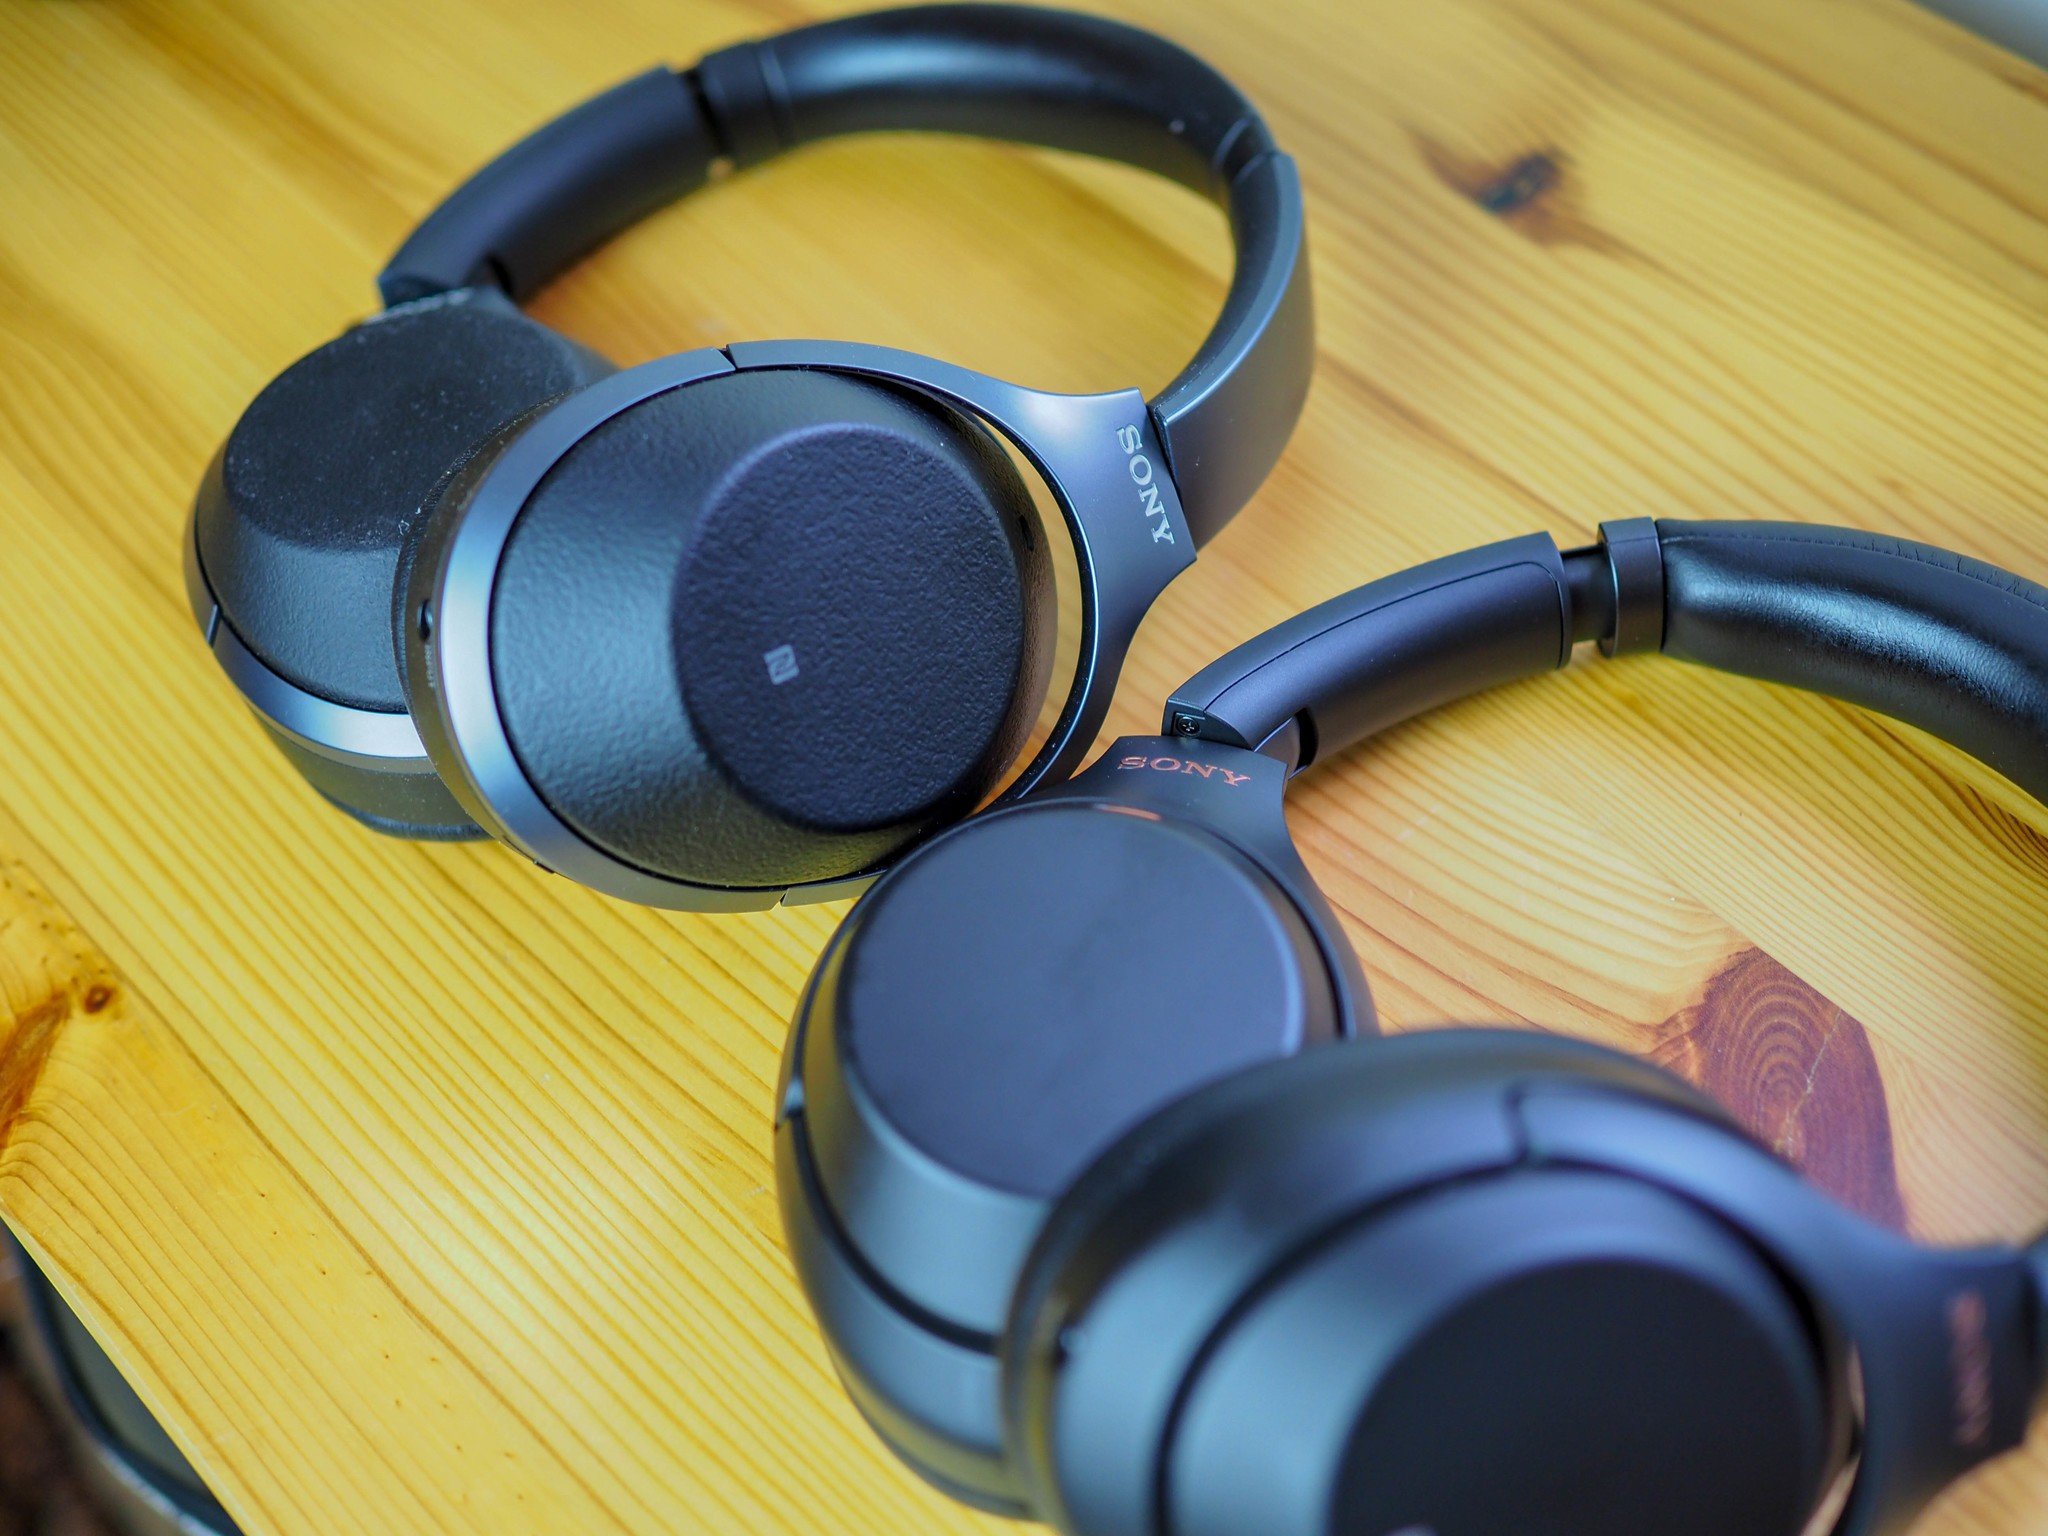 Best headphones with Amazon Alexa support 2022